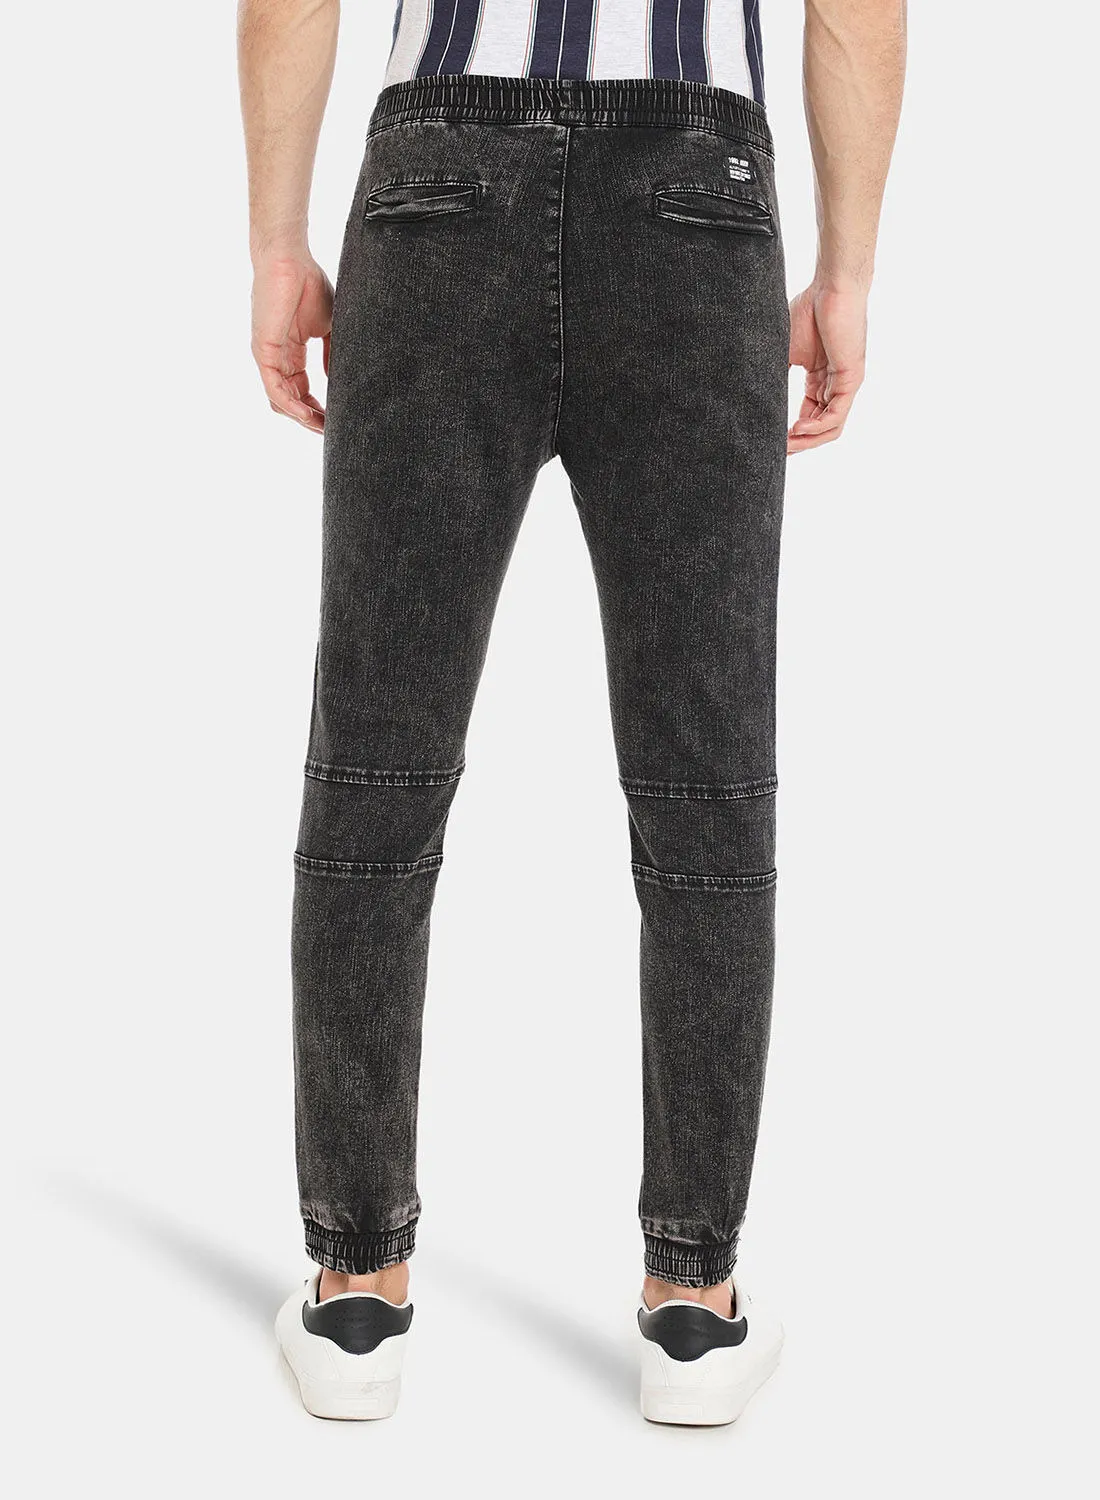 R&B Slim Fit Textured Mid Rise Jog Pants With Pocket Detail Black